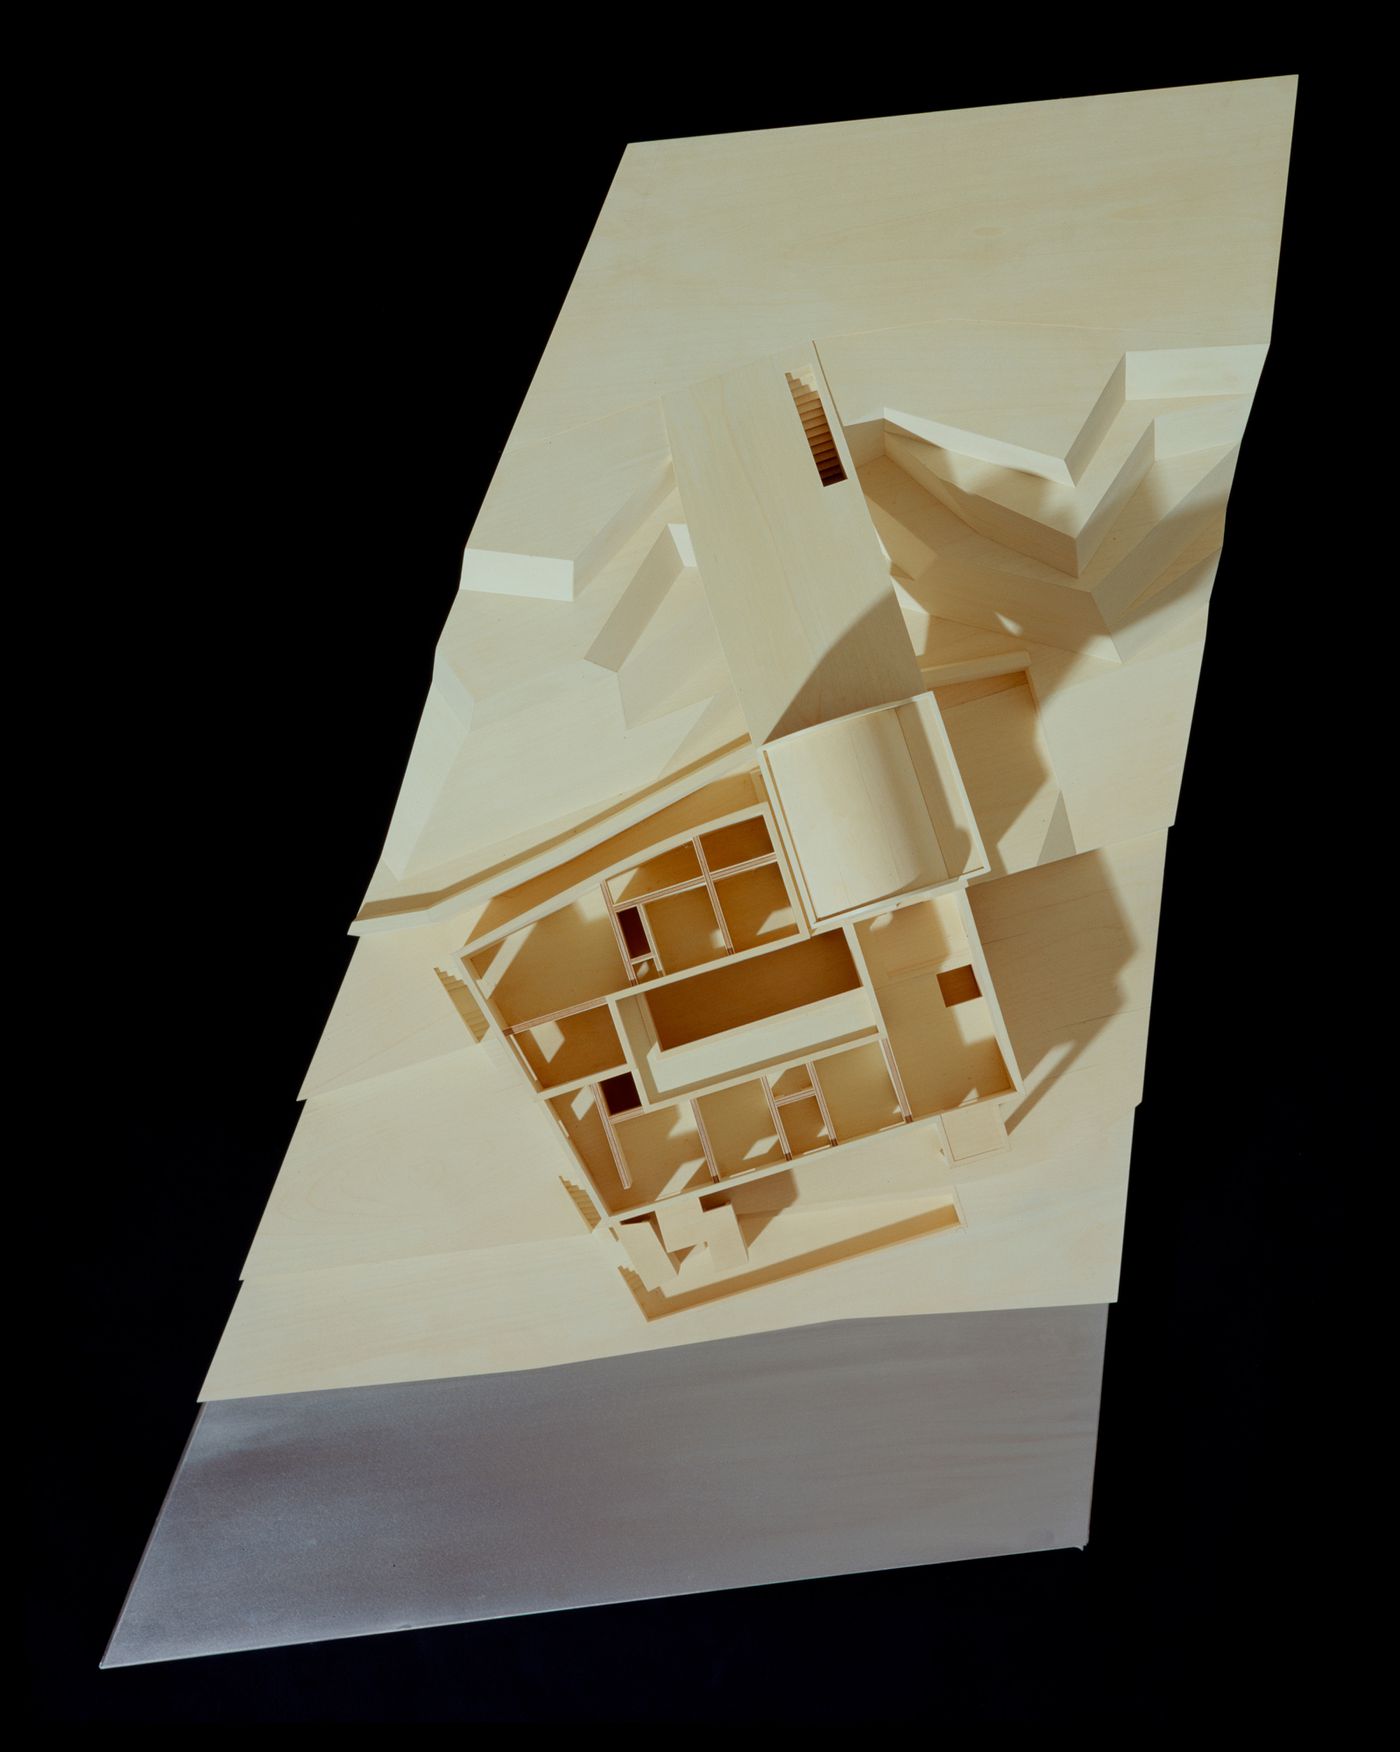 View of model for Casa Mário Bahia [Mário Bahia house], Gondomar, Portugal